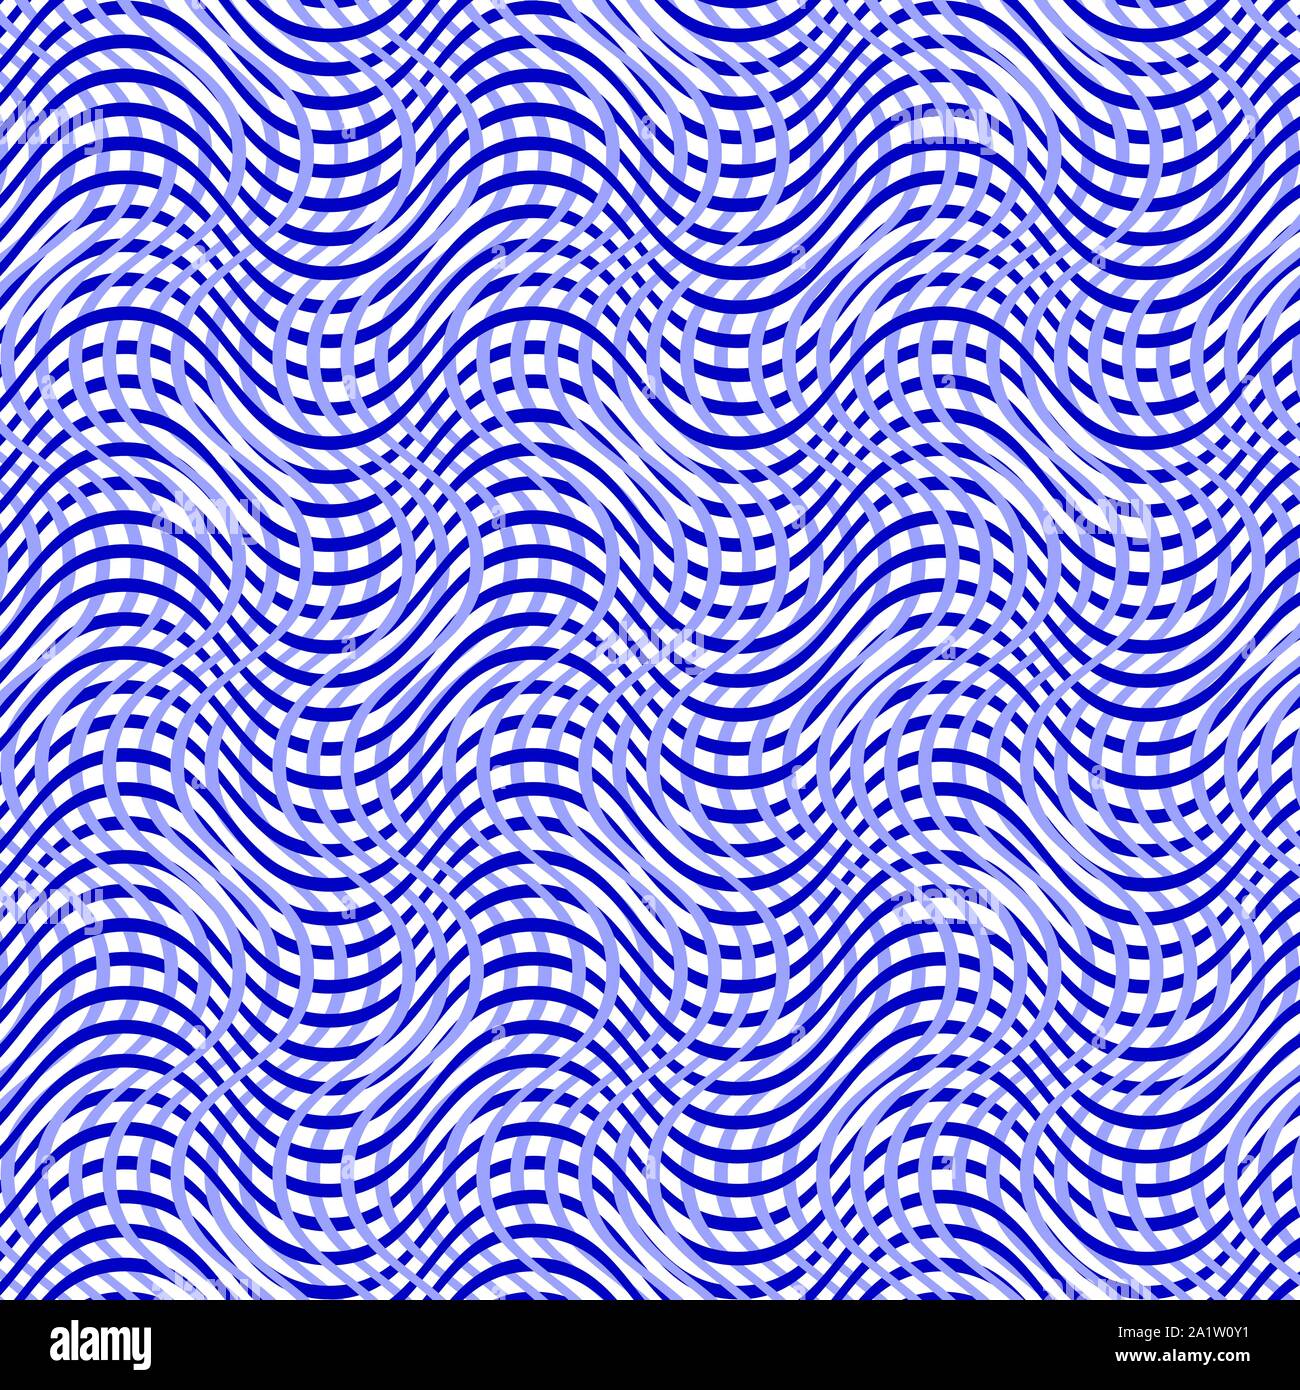 Duotone, 2-color geometric pattern of dense wavy lattice, grid ...